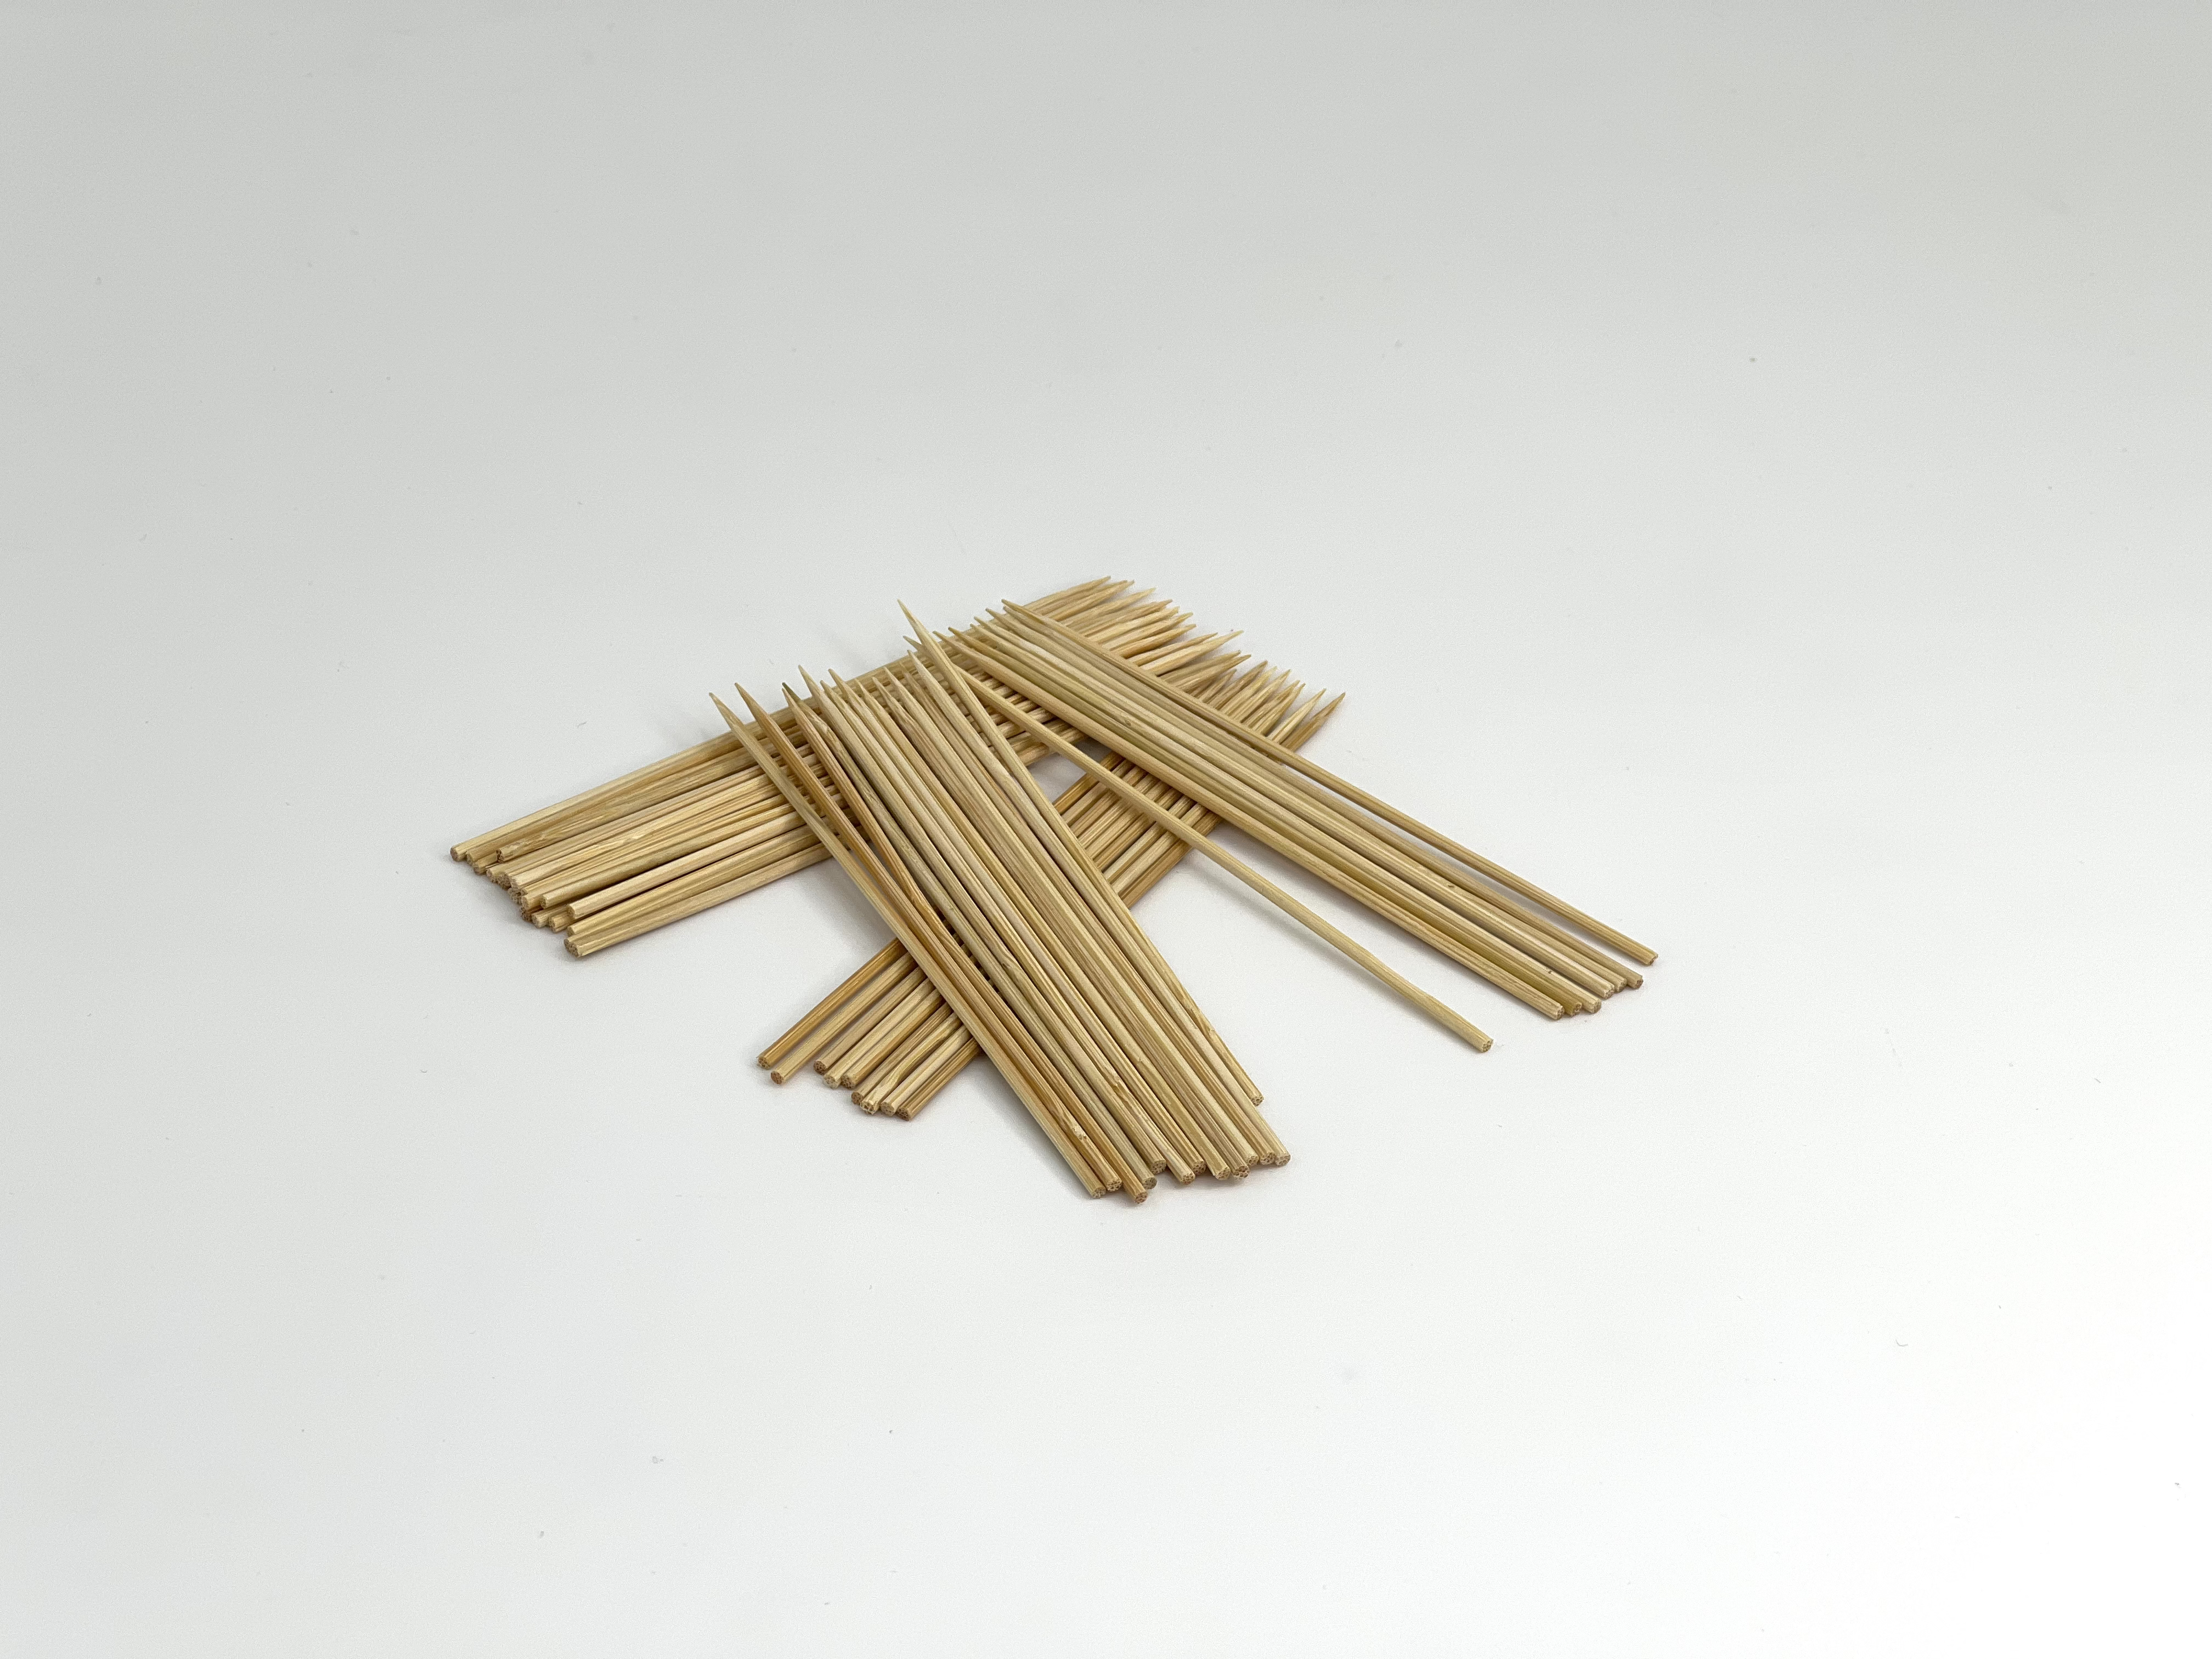 Bamboo Skewers (Pack of 50)